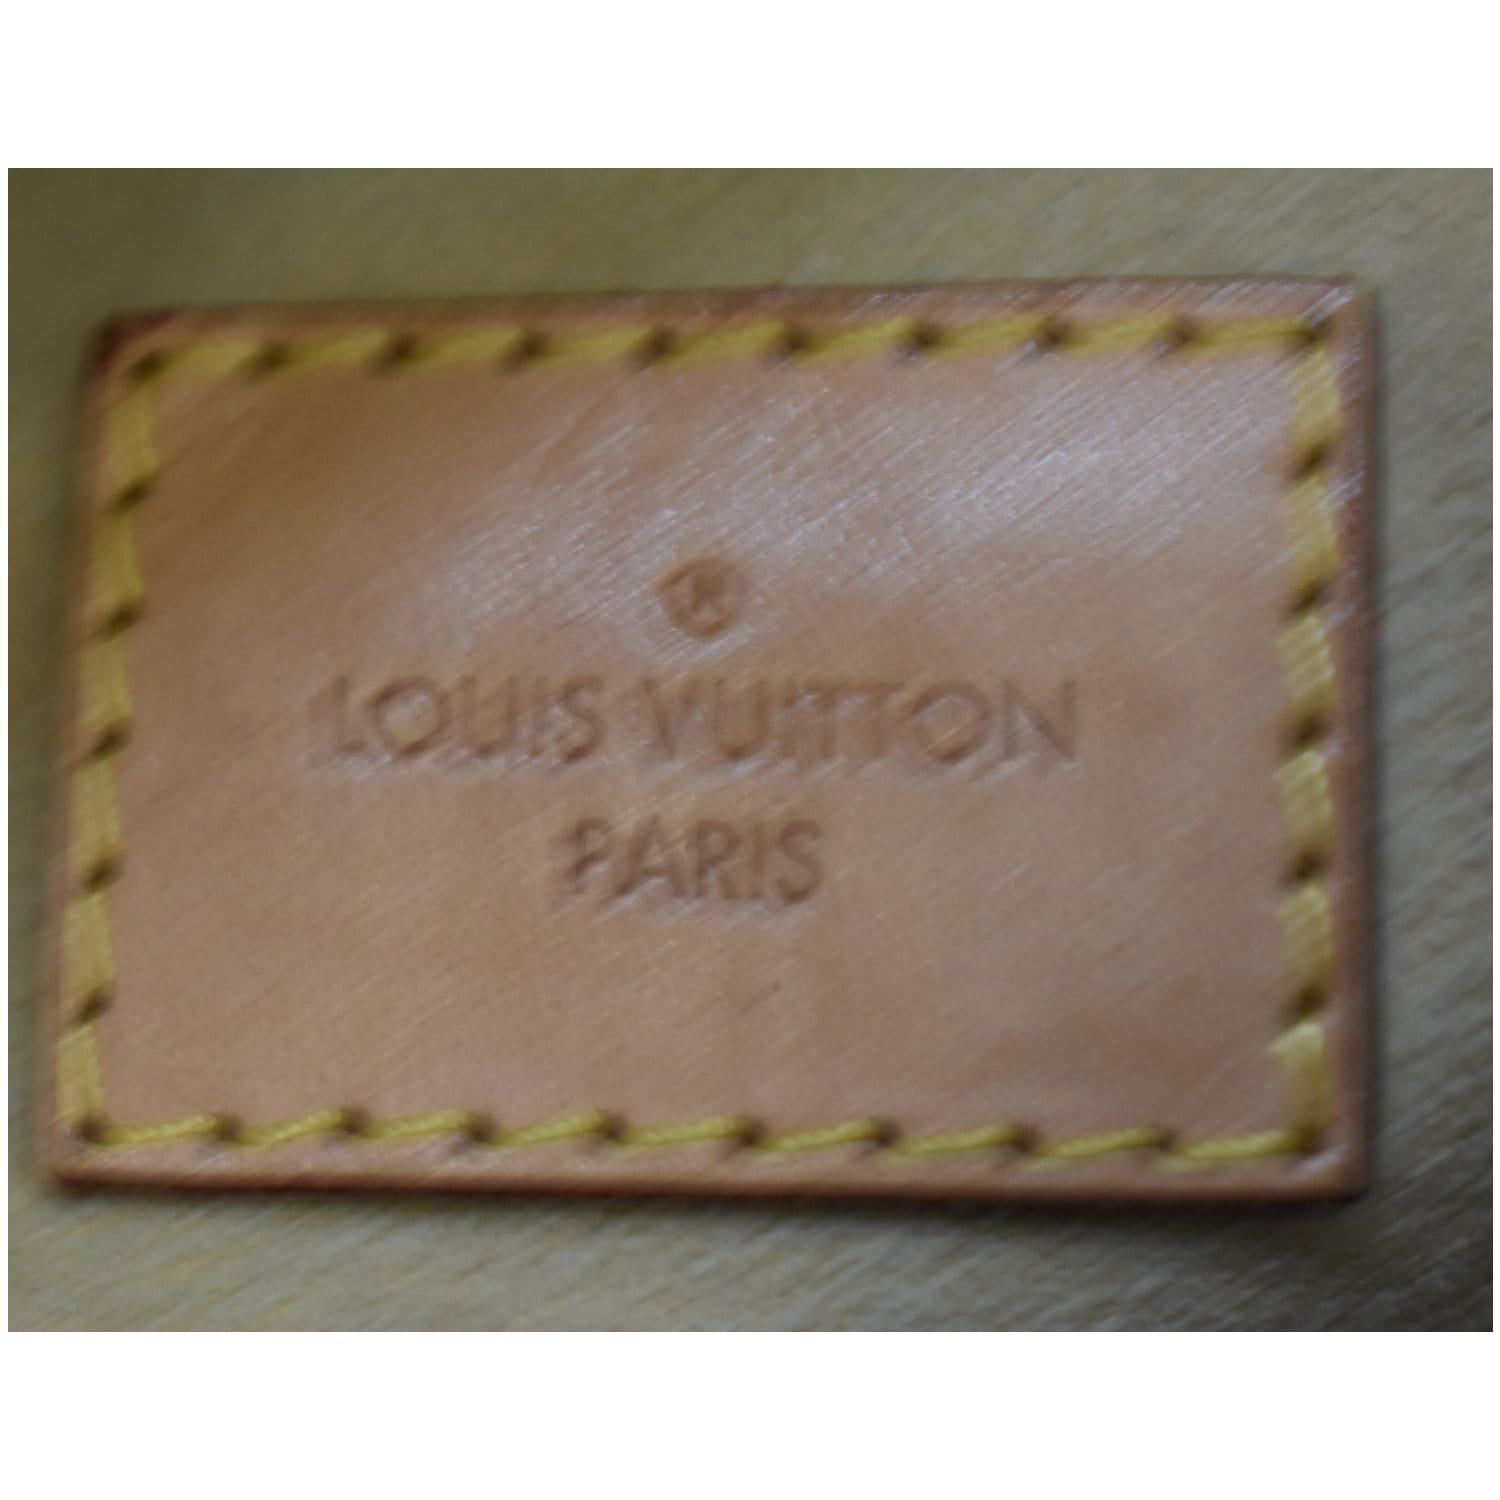 Shop Louis Vuitton Artsy Mm (N40253, M44869) by lifeisfun